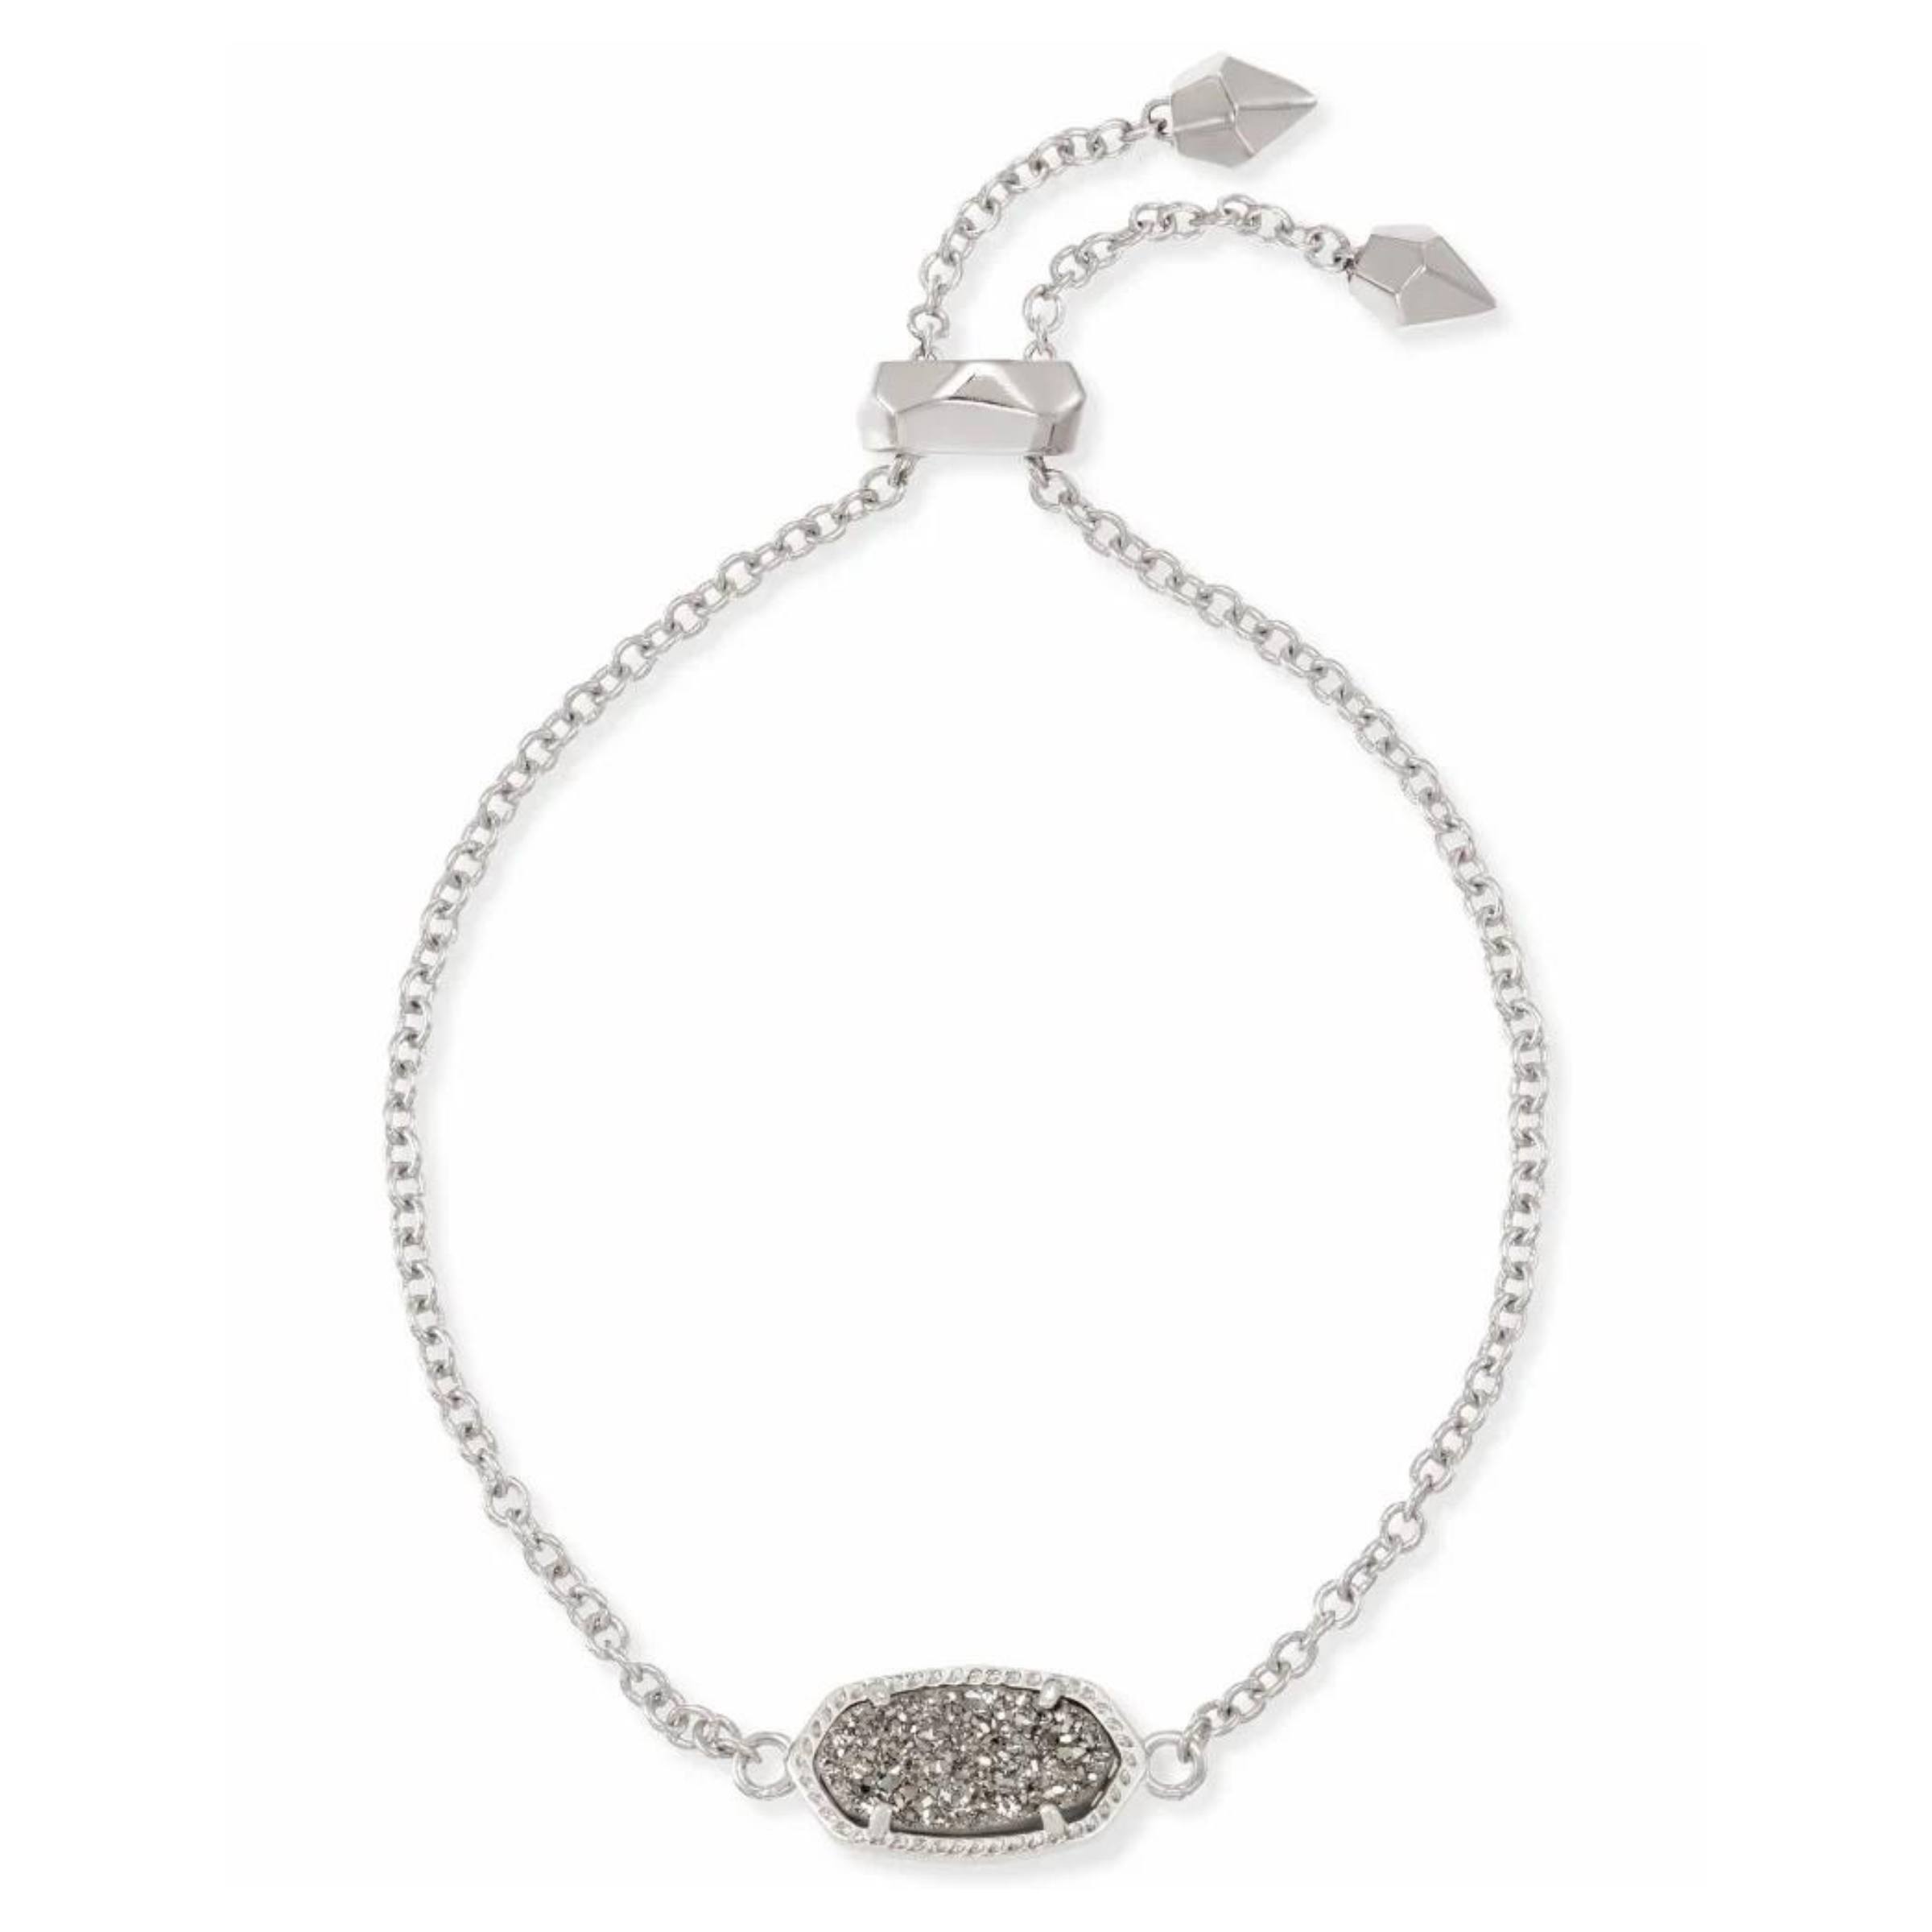 Kendra Scott | Elaina Silver Adjustable Chain Bracelet in Platinum Drusy - Giddy Up Glamour Boutique